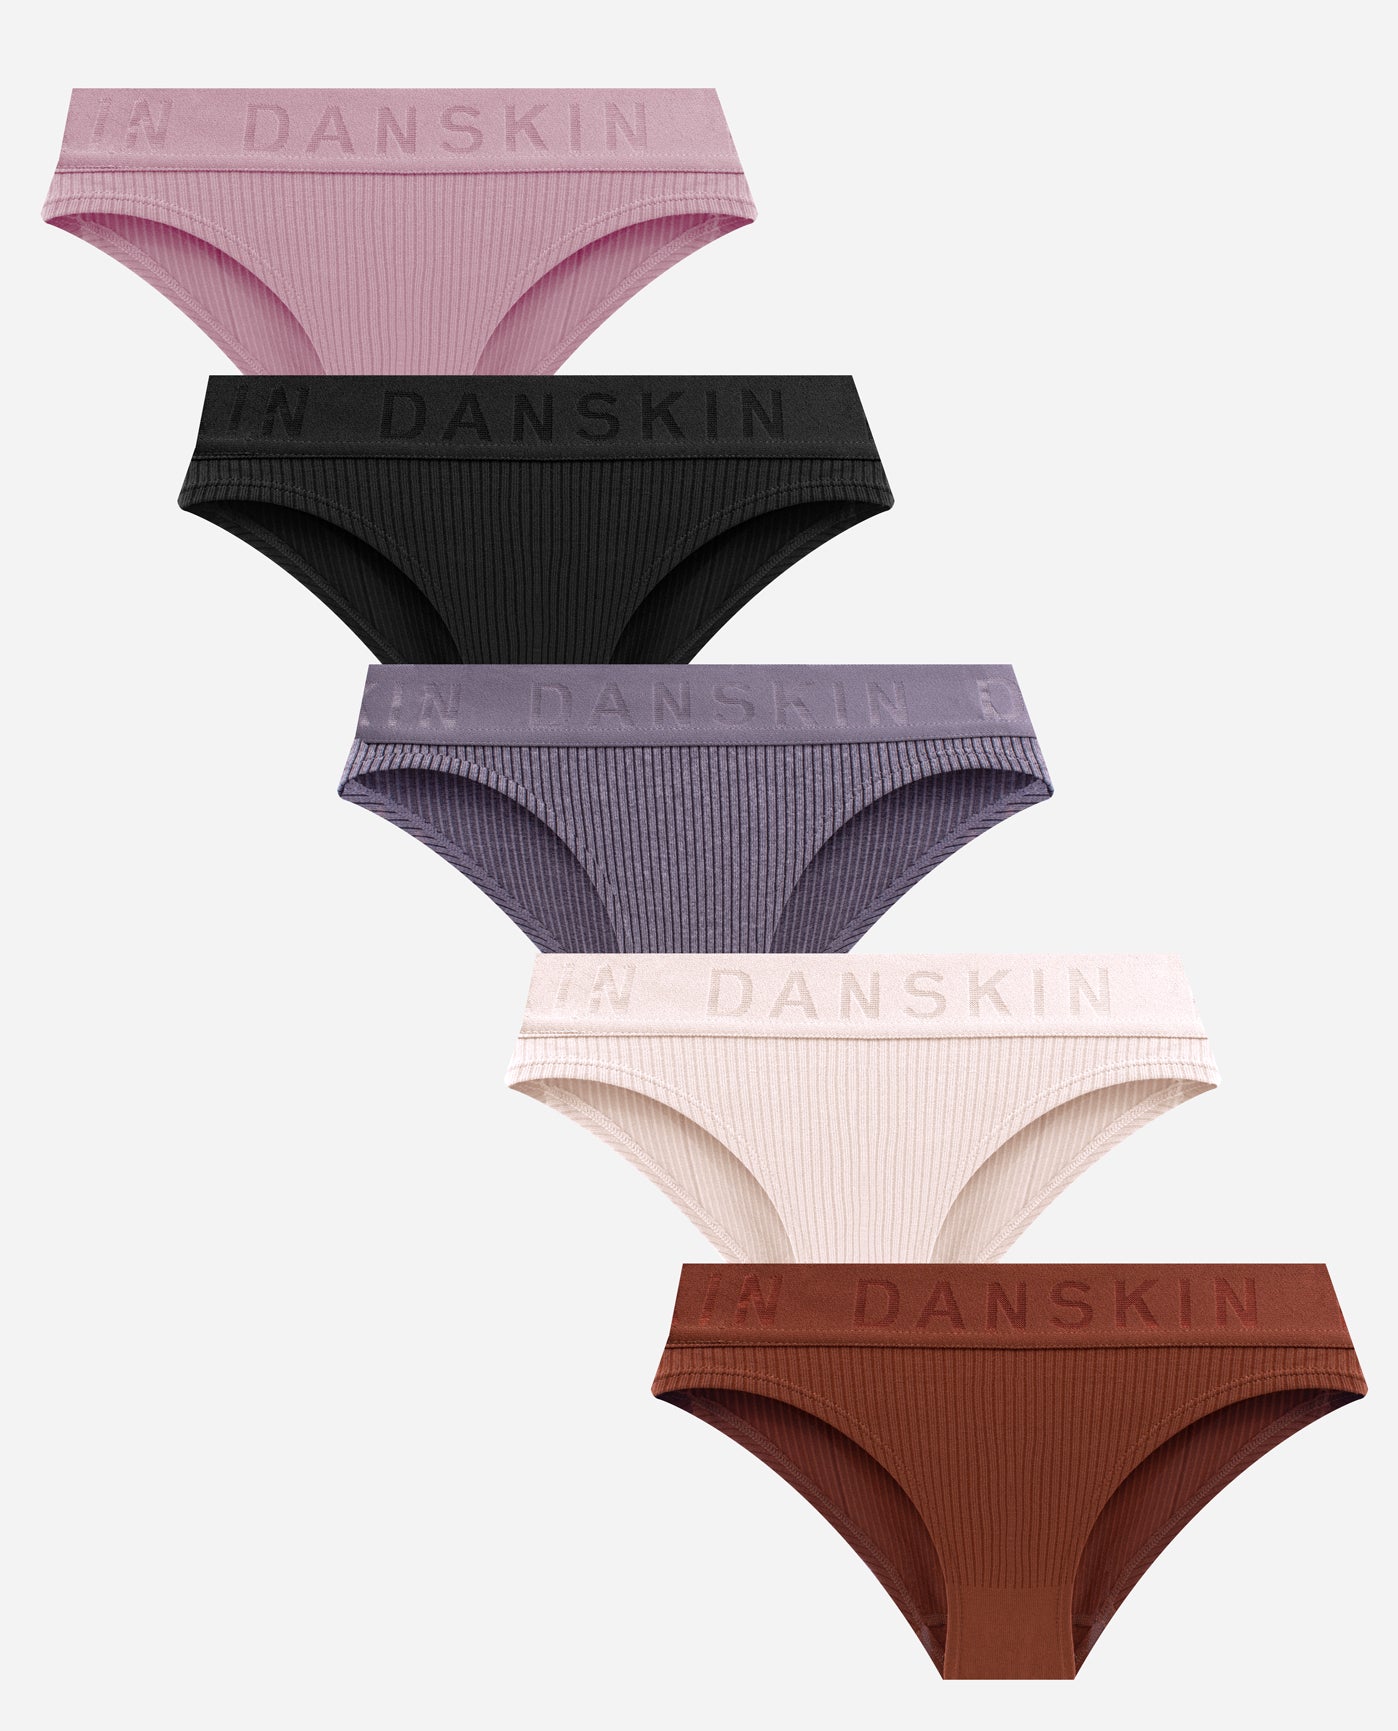 DANSKIN Girls Perfect Fit Everyday Comfort Panties Underwear Set of 3 NEW